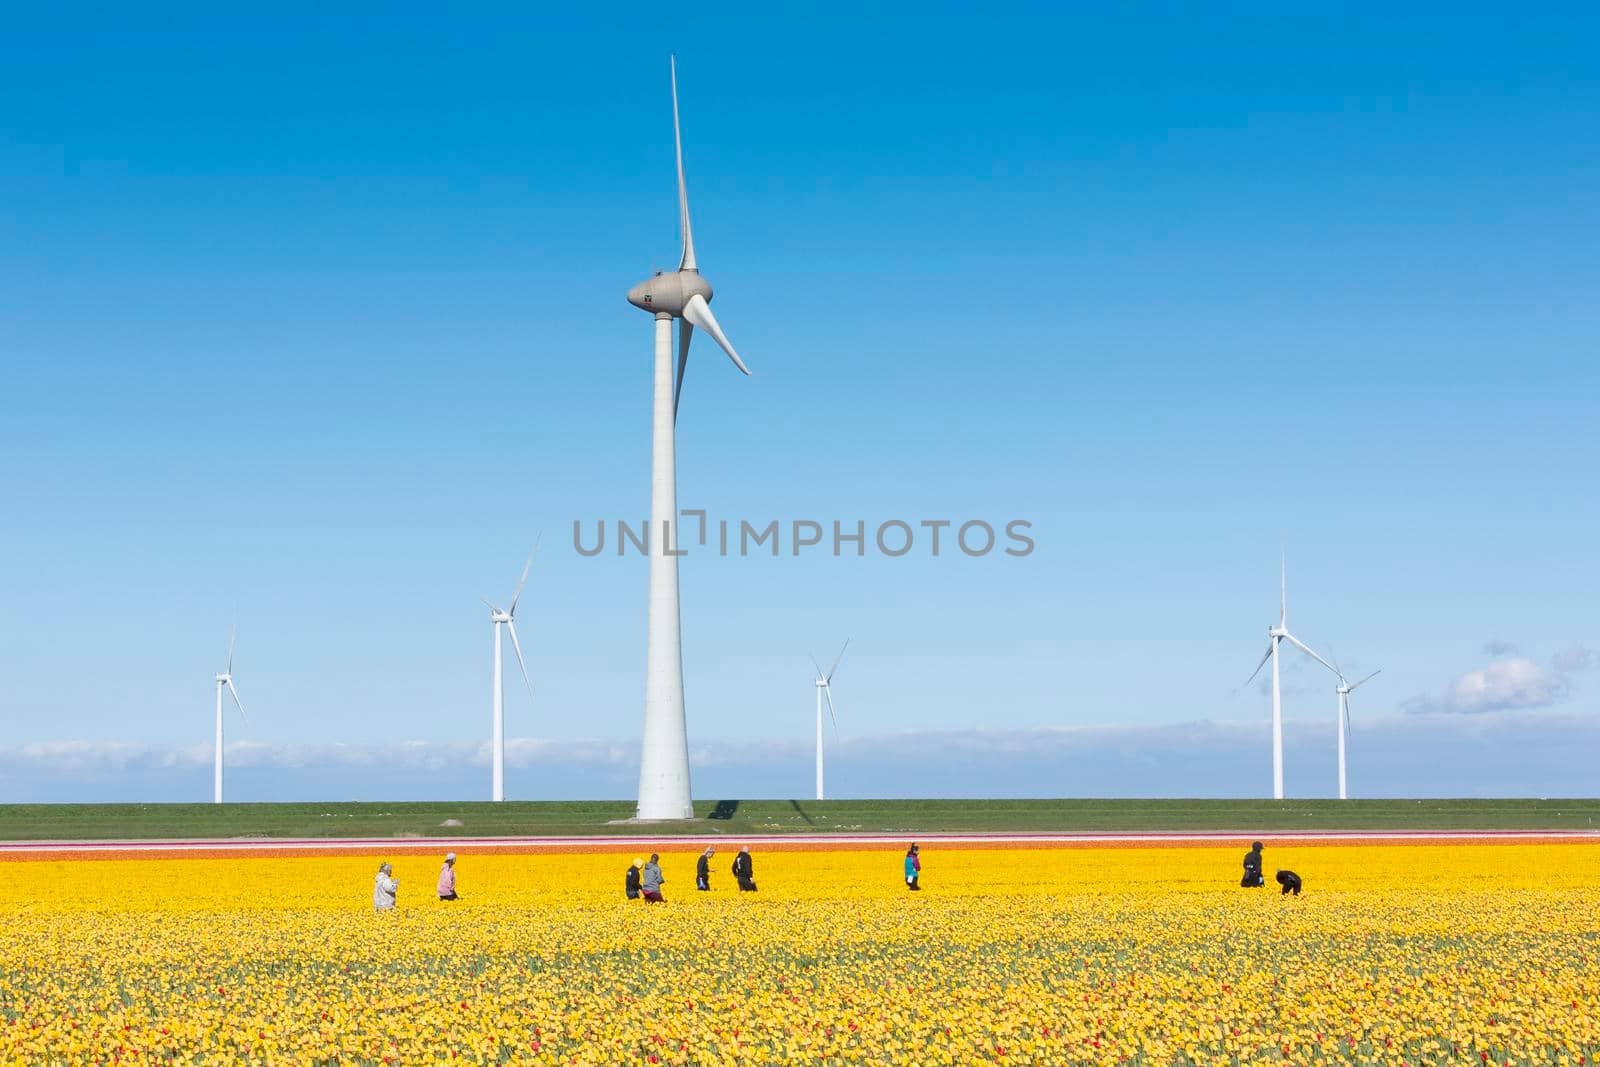 people work in field of yellow tulips near wind turbines under blue sky in the netherlands